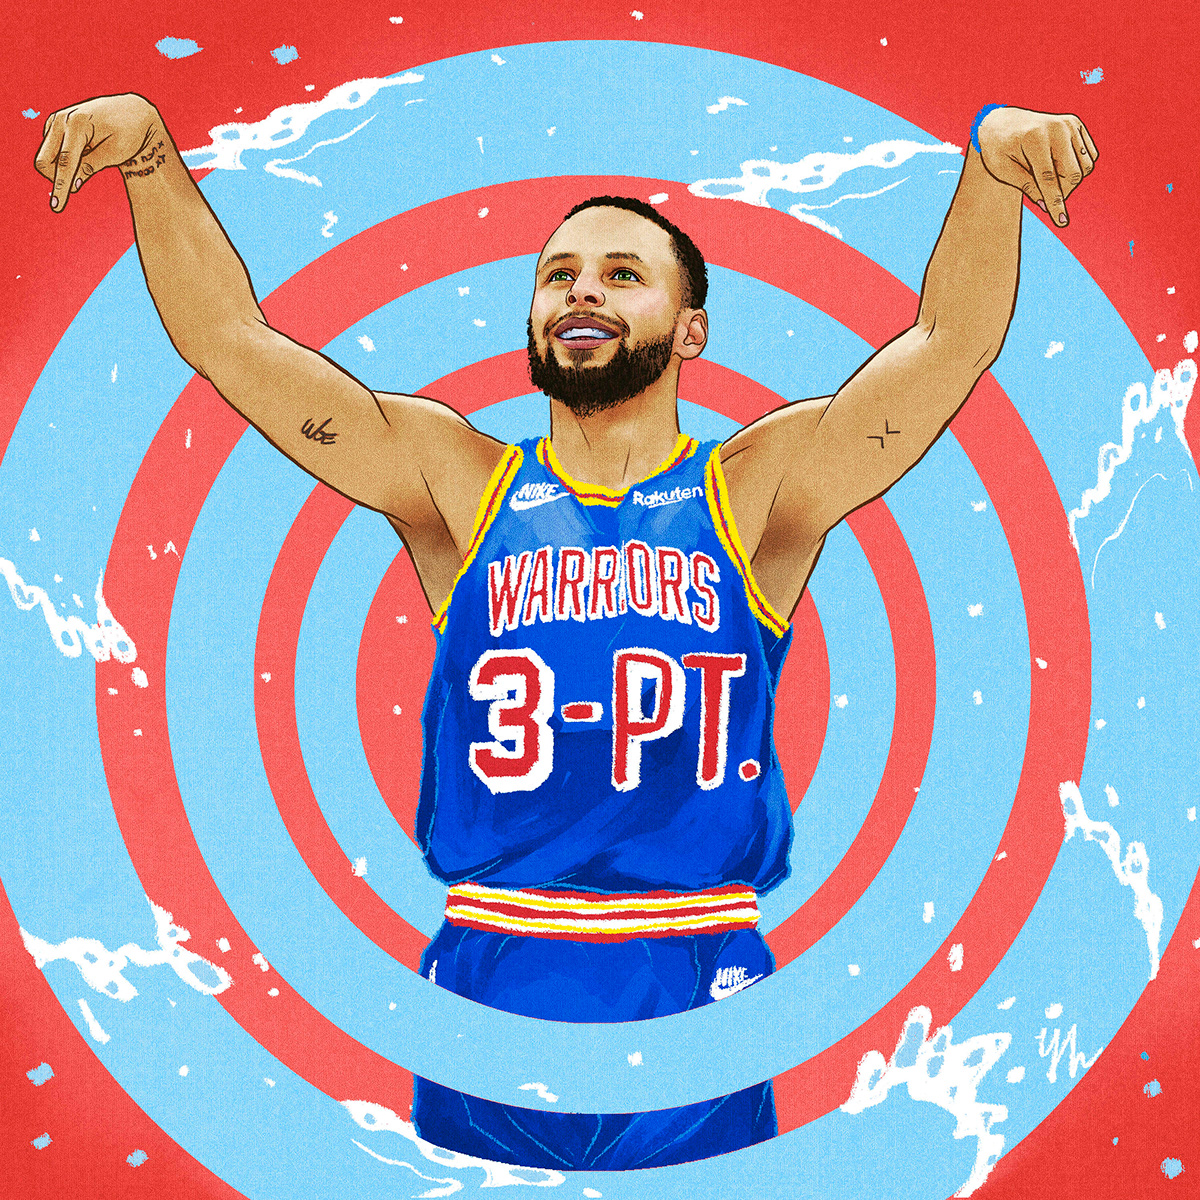 NBA Art NBA Illustration sports athletes portrait art athlete Social media post campaign